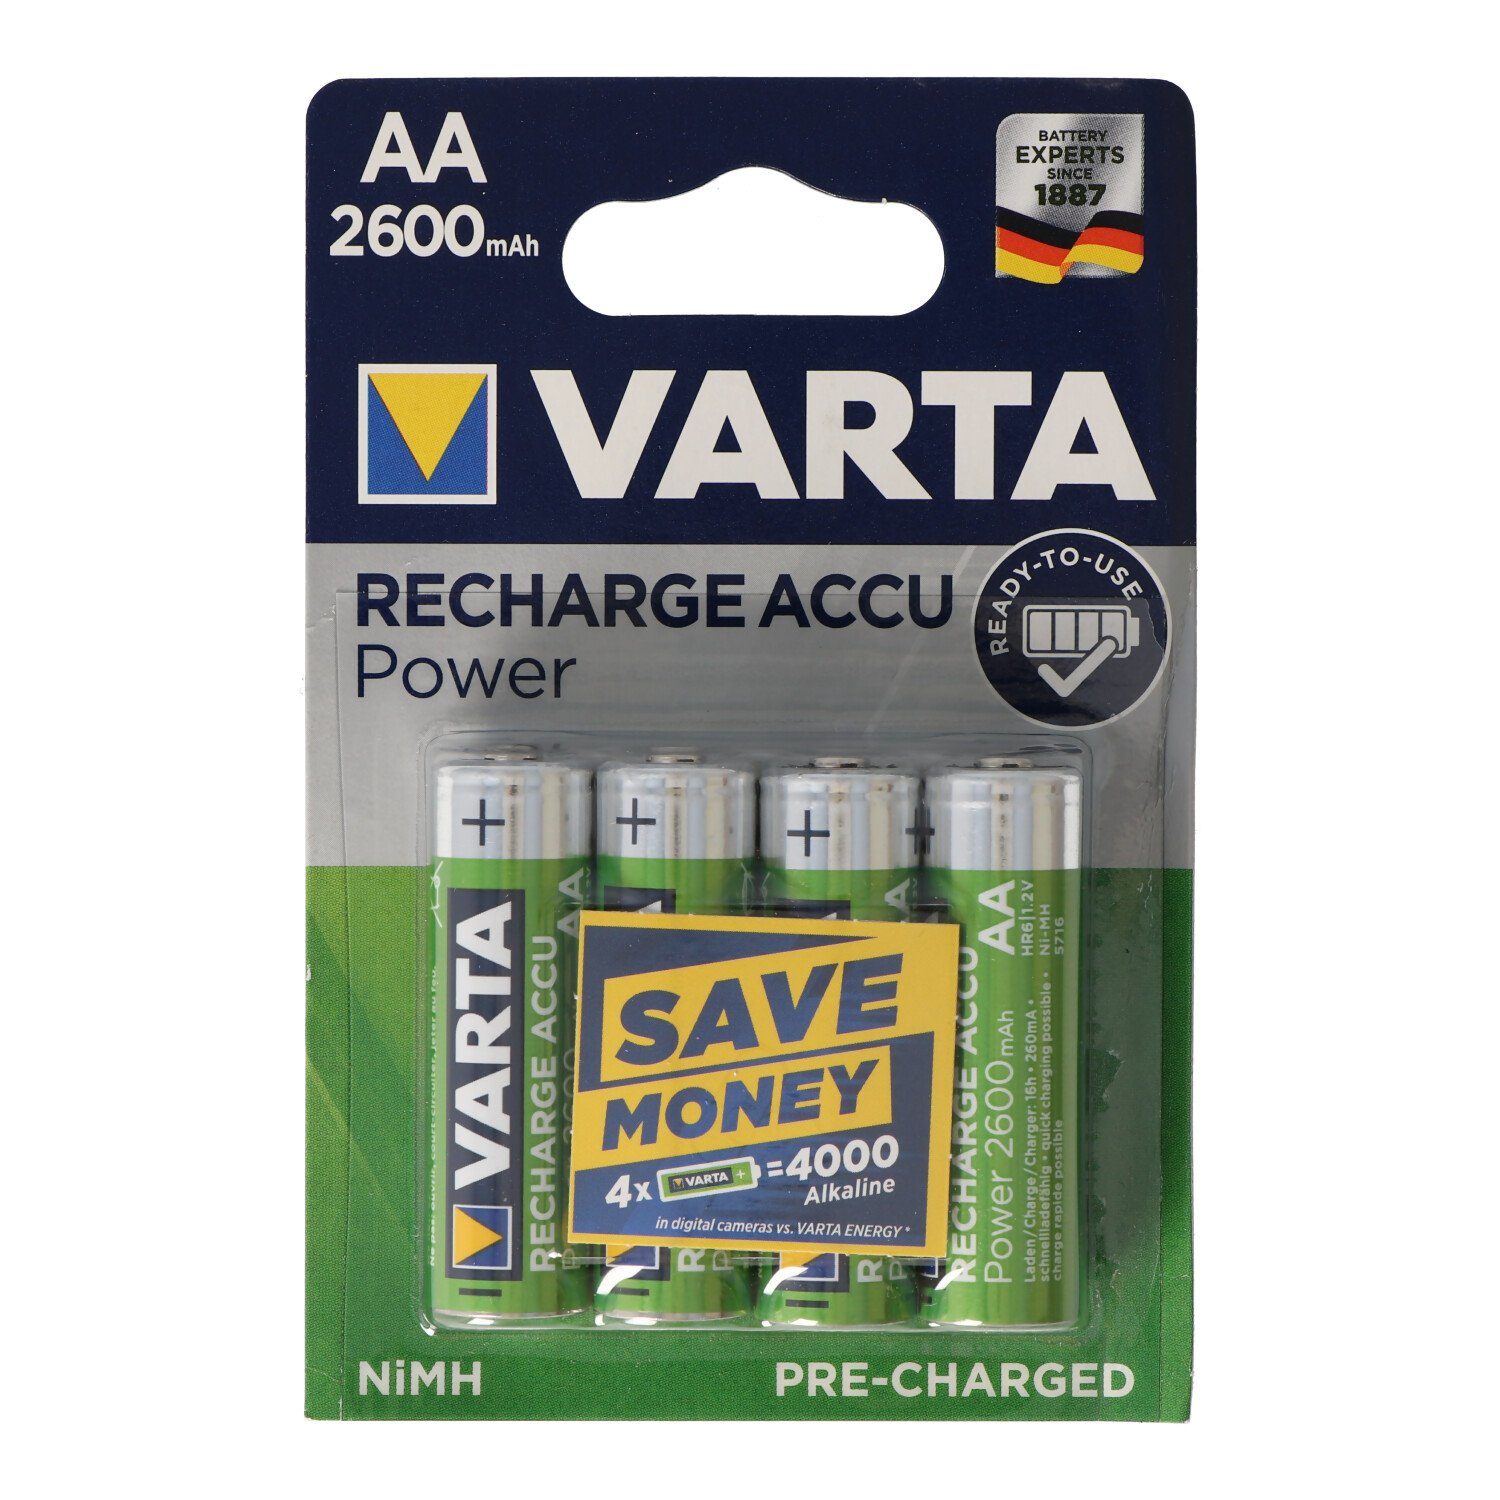 VARTA Varta Ready2Use 2600mAh Mignon AA Akkus 4er Pack inklusive AccuCell A Akku 2600 mAh (1,2 V)